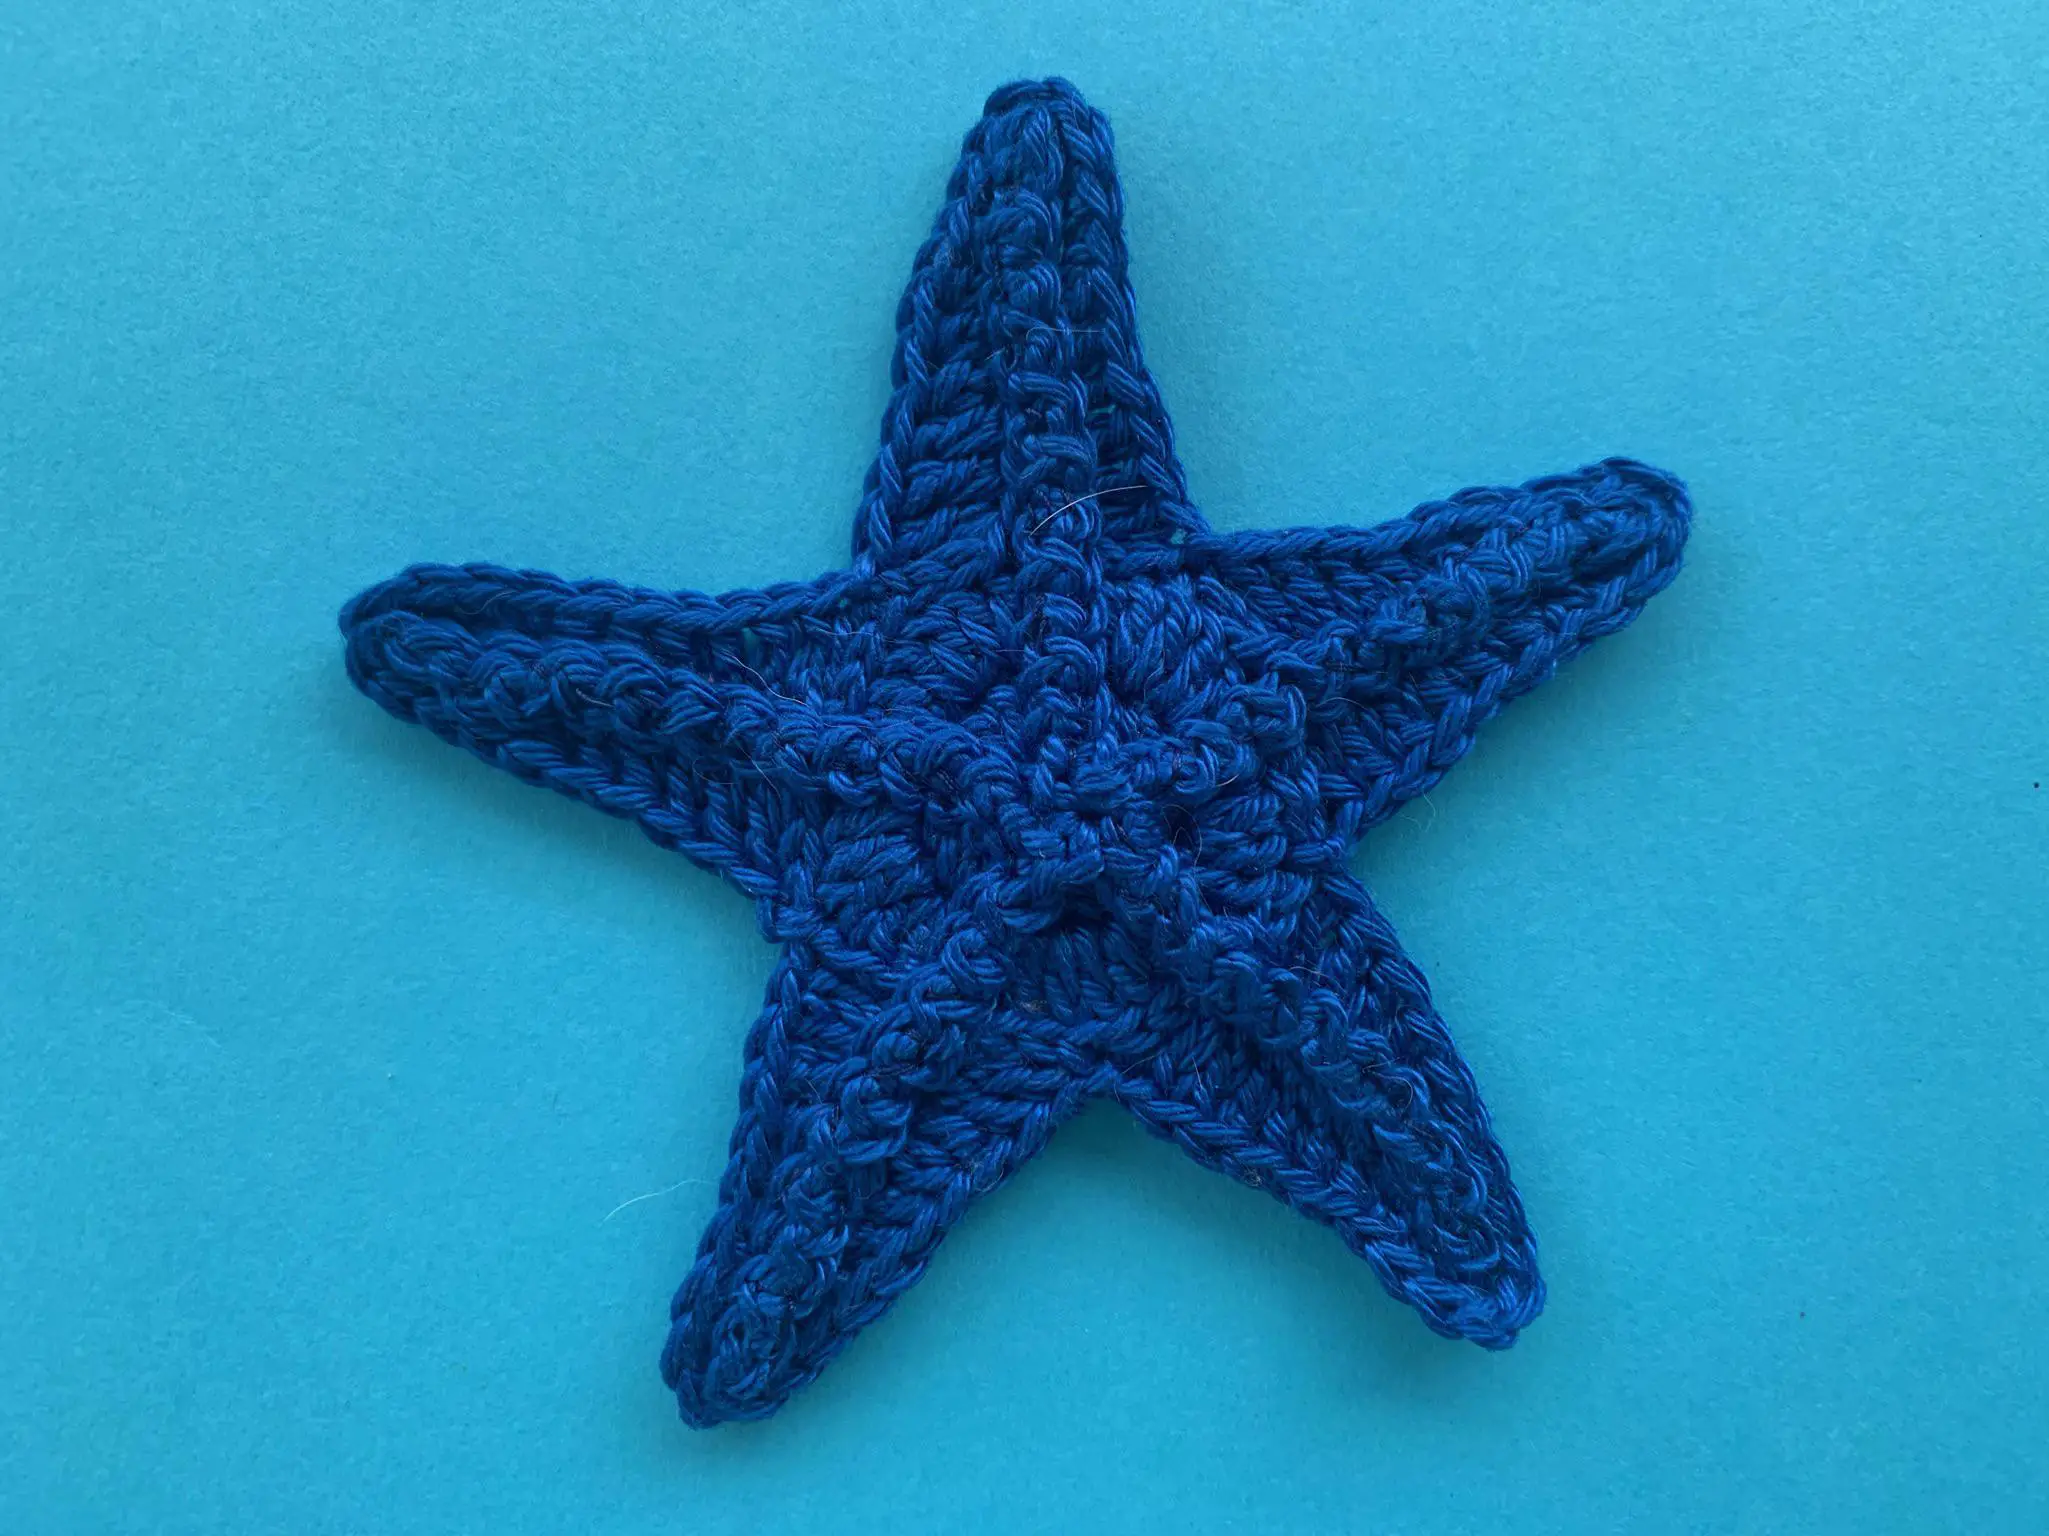 Finished crochet starfish 4 ply landscape